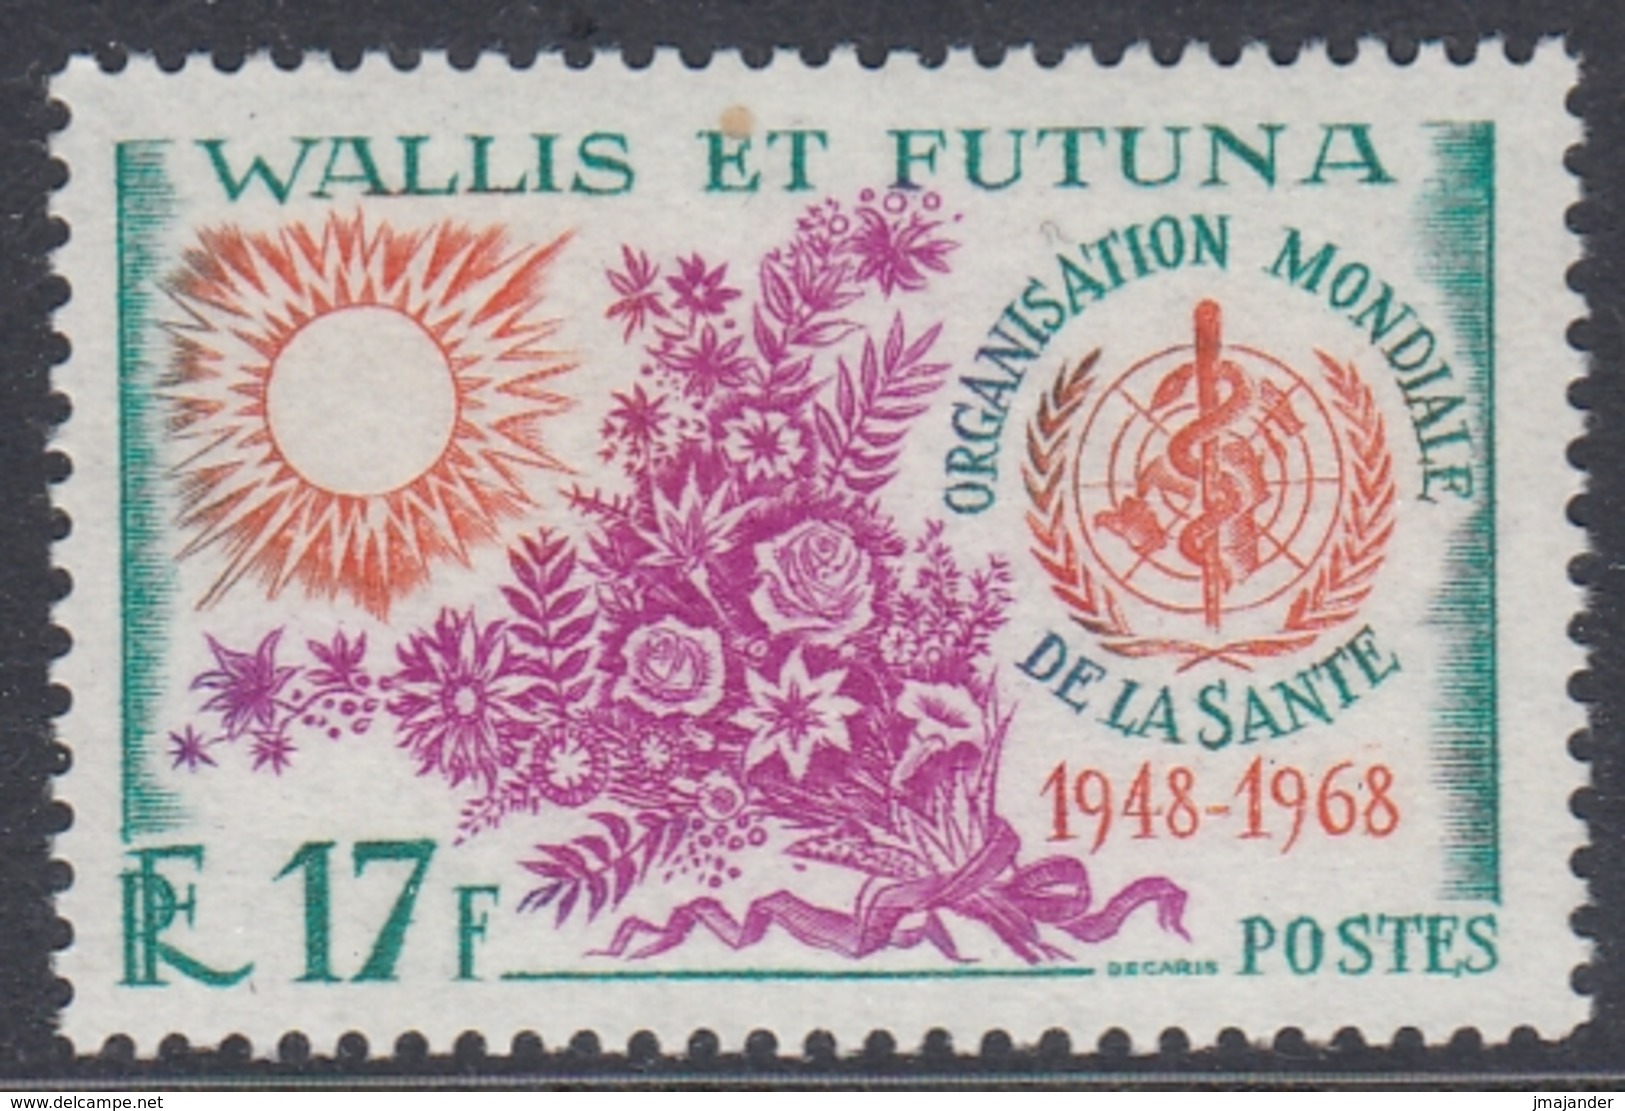 Wallis And Futuna 1968 - The 20th Anniversary Of WHO - Mi 217 ** MNH - Ungebraucht